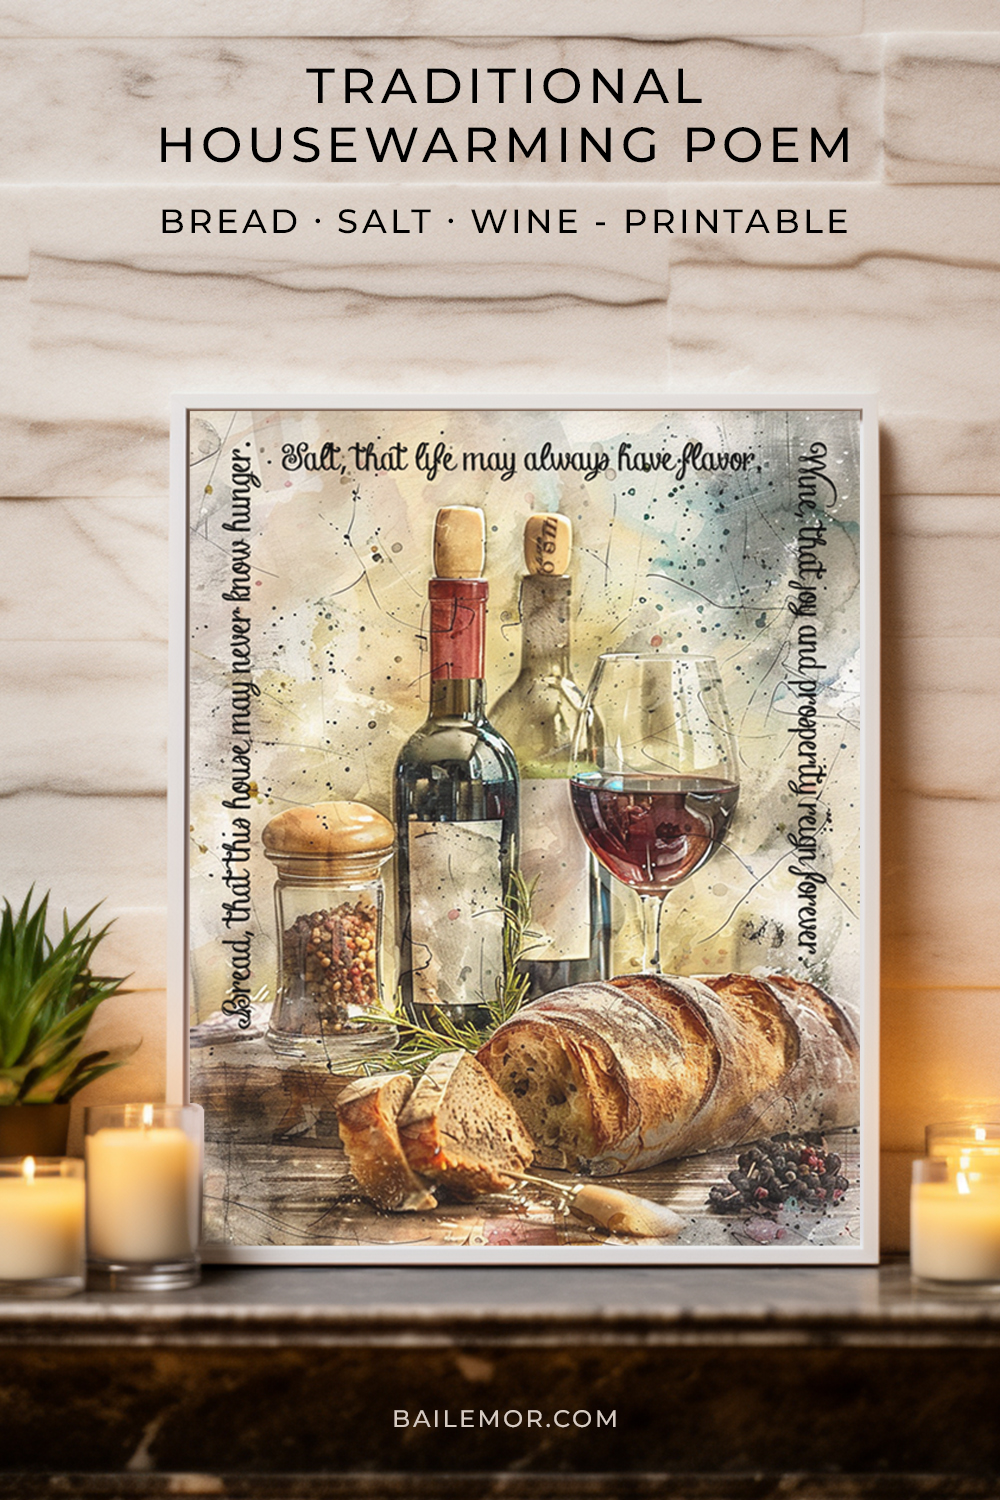 watercolor of the  traditional bread, salt, wine housewarming poem.